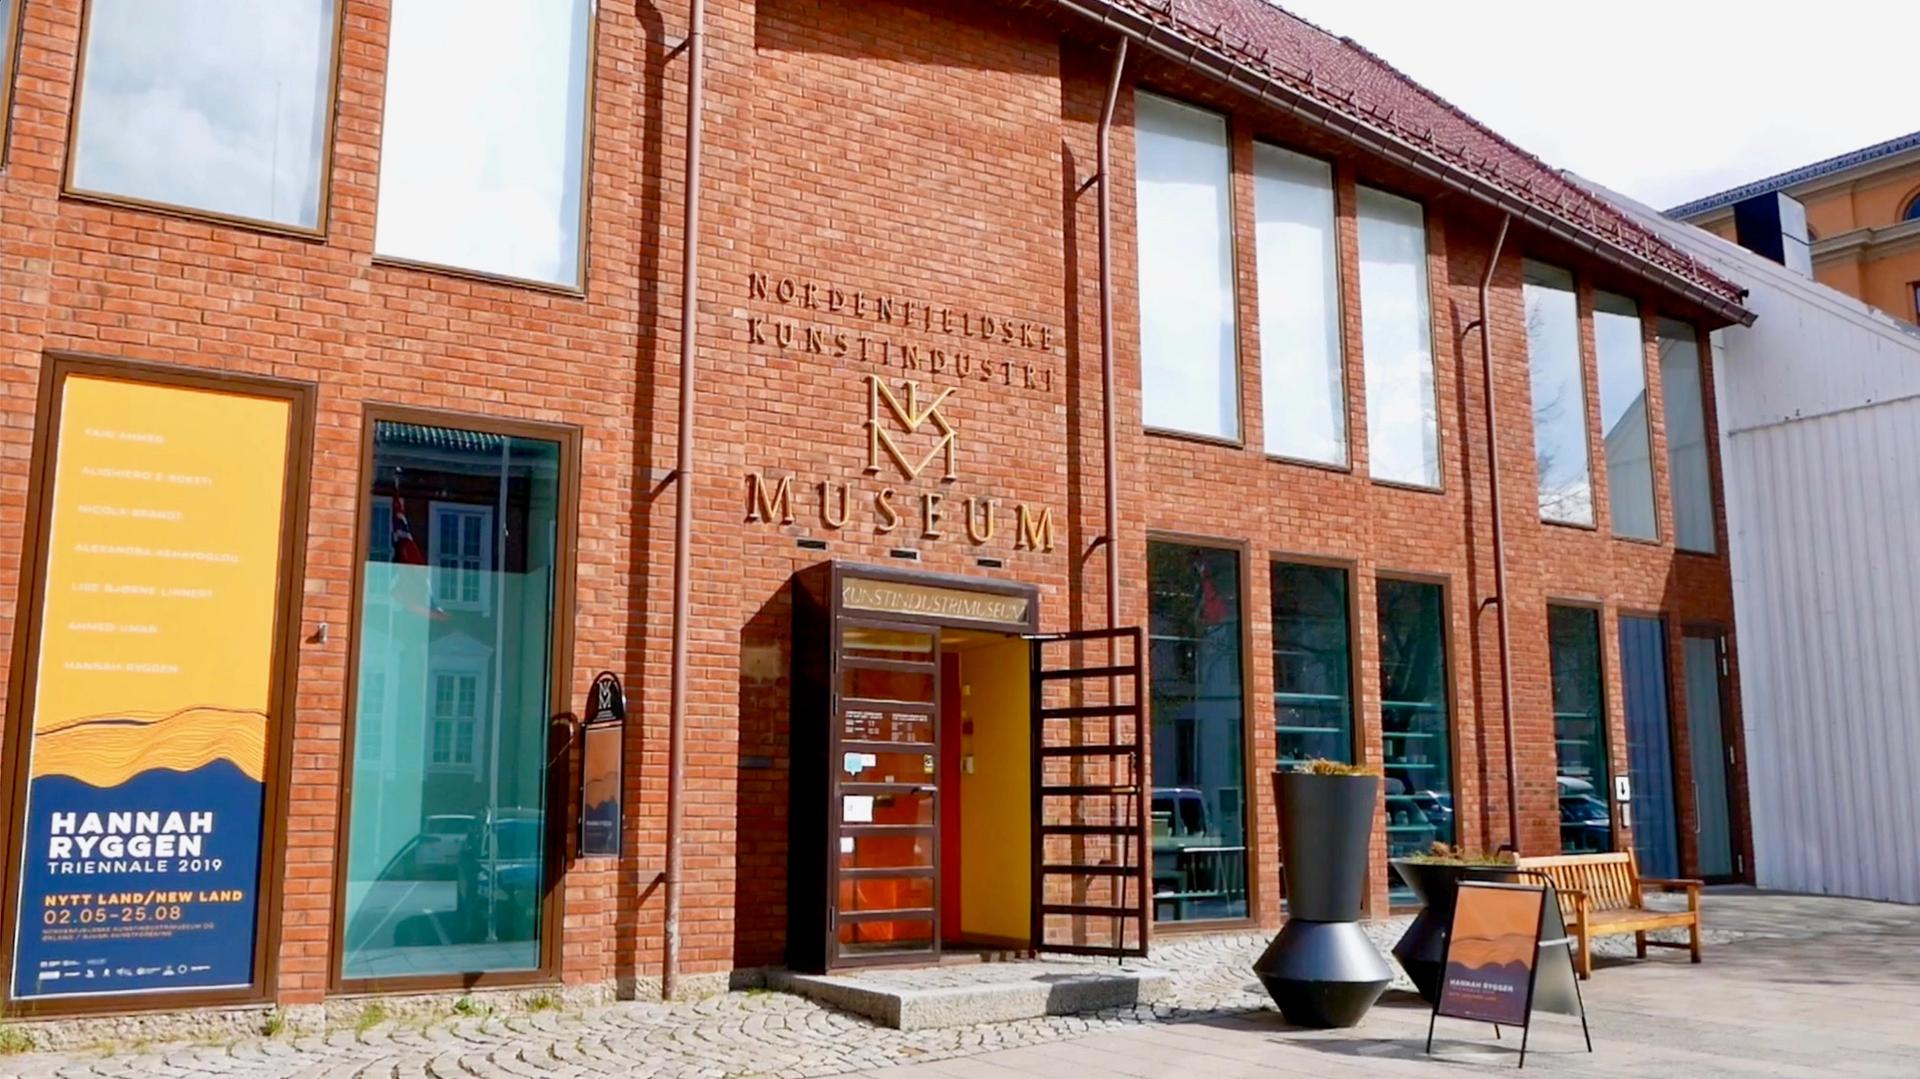 Nordenfjeldske kunstindustrimuseum